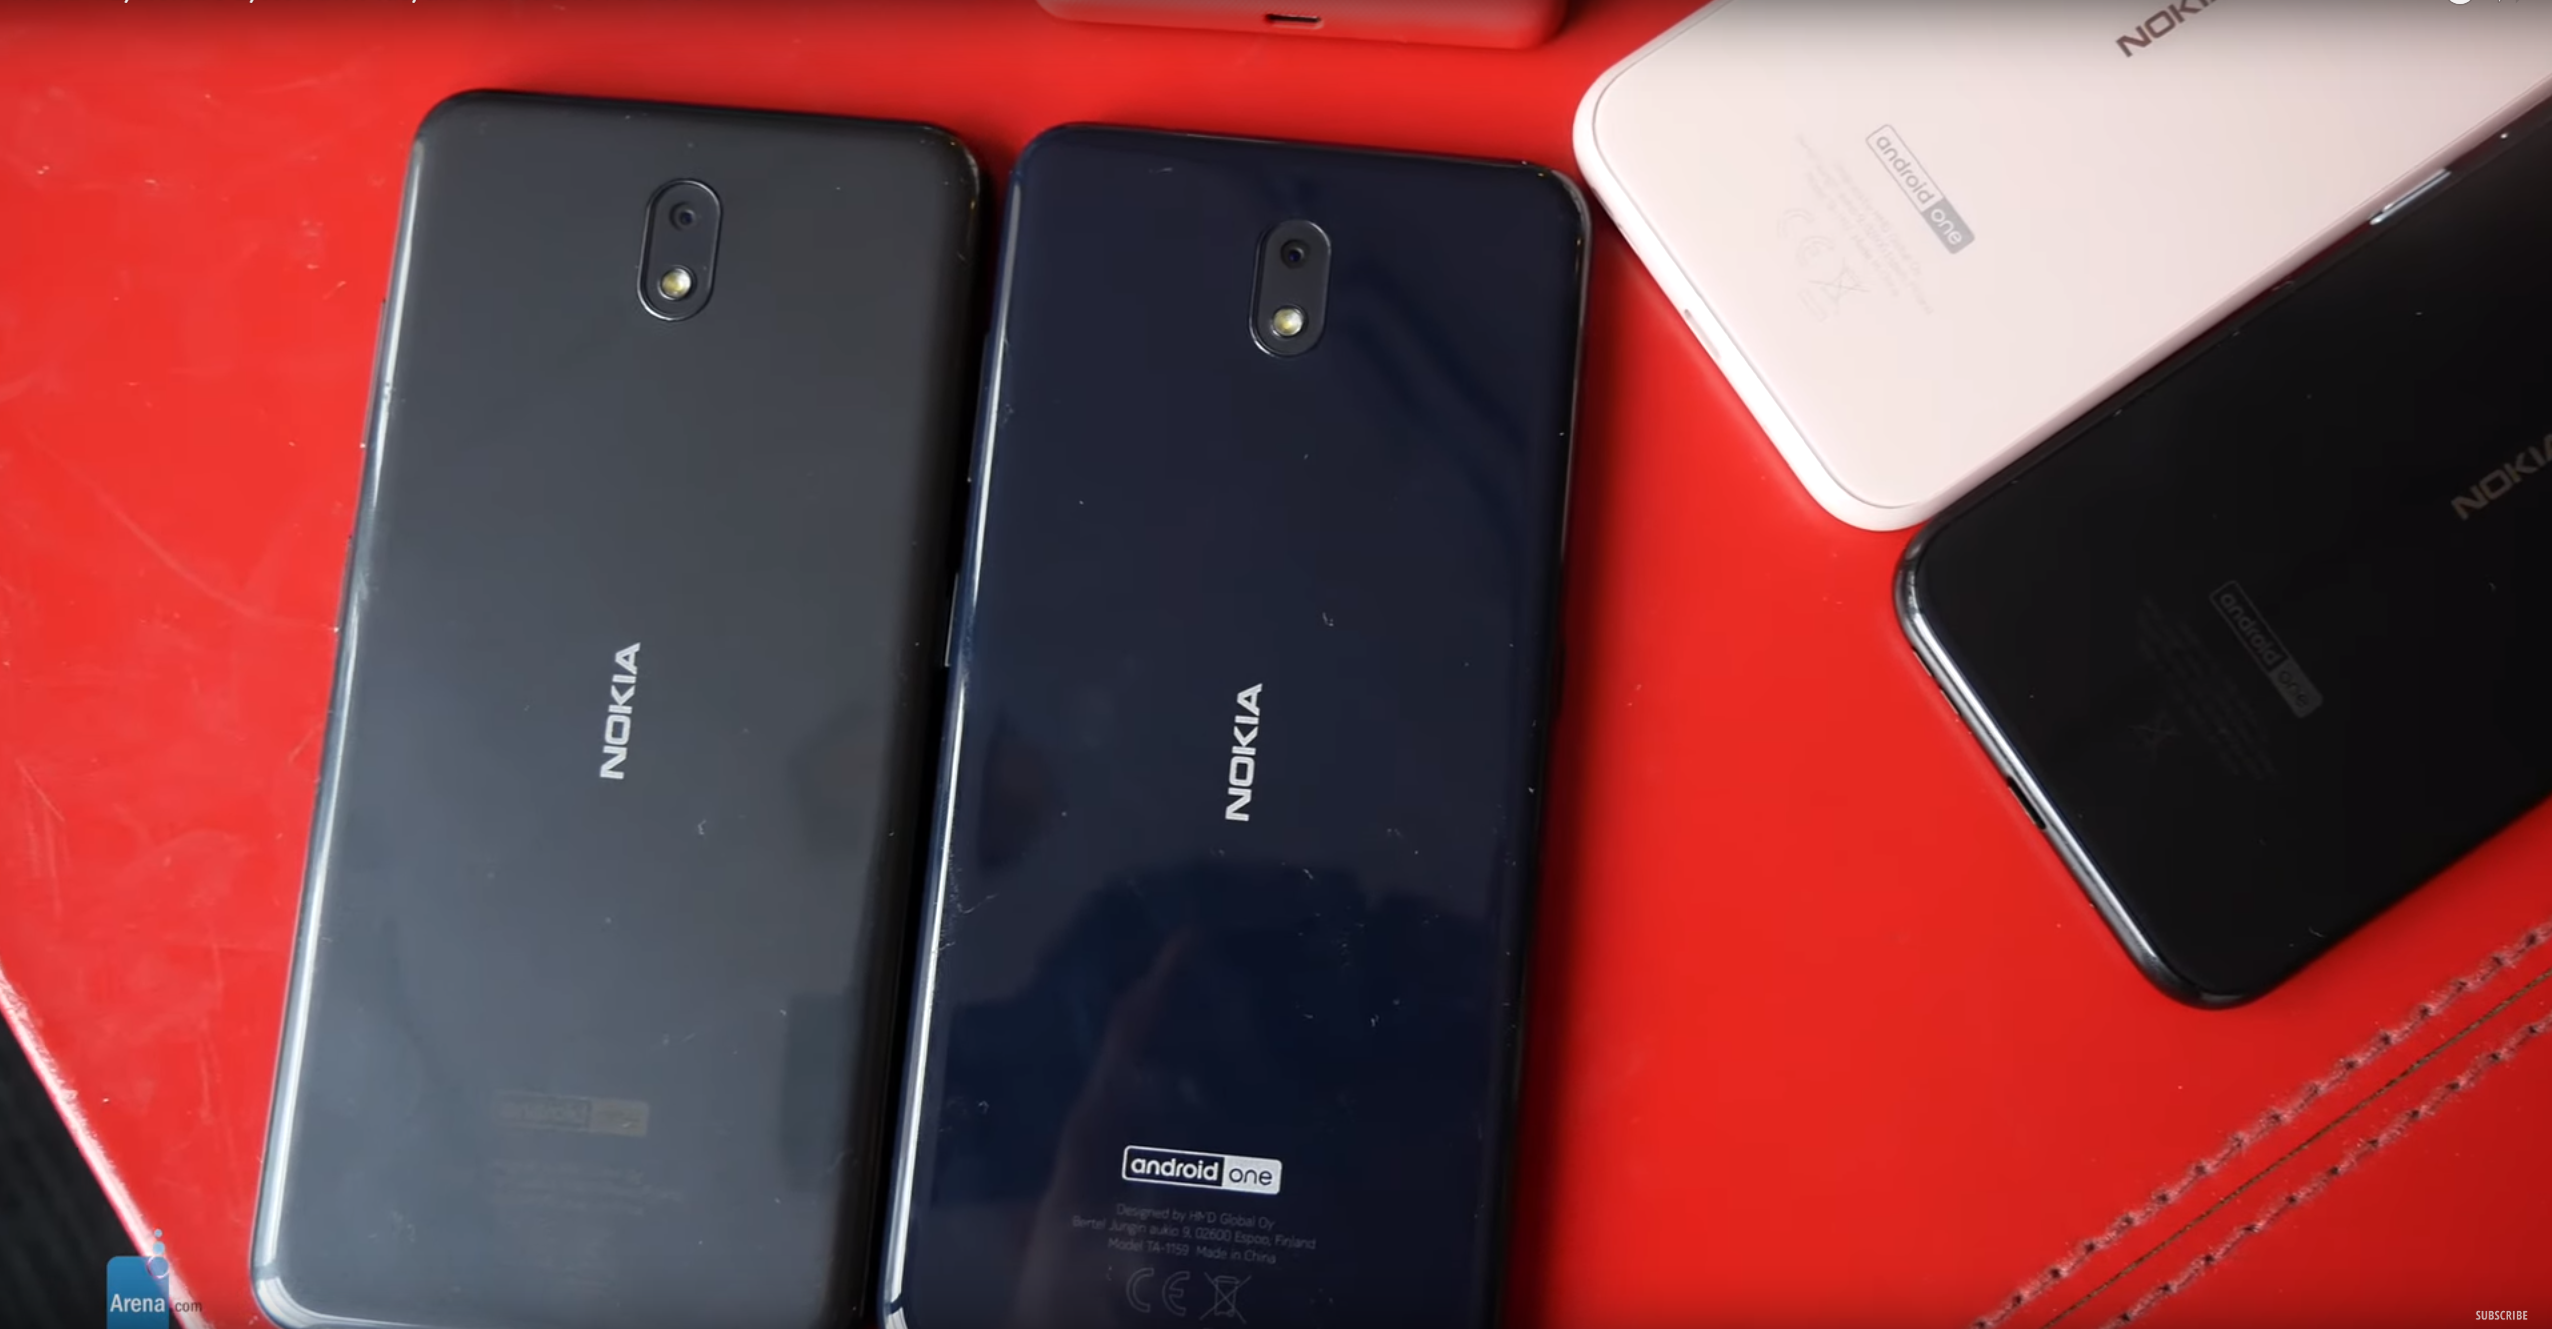 Budget Nokia smartphones galore! The new Nokia 4.2, Nokia 3.2 and Nokia 1.1 Plus are here!